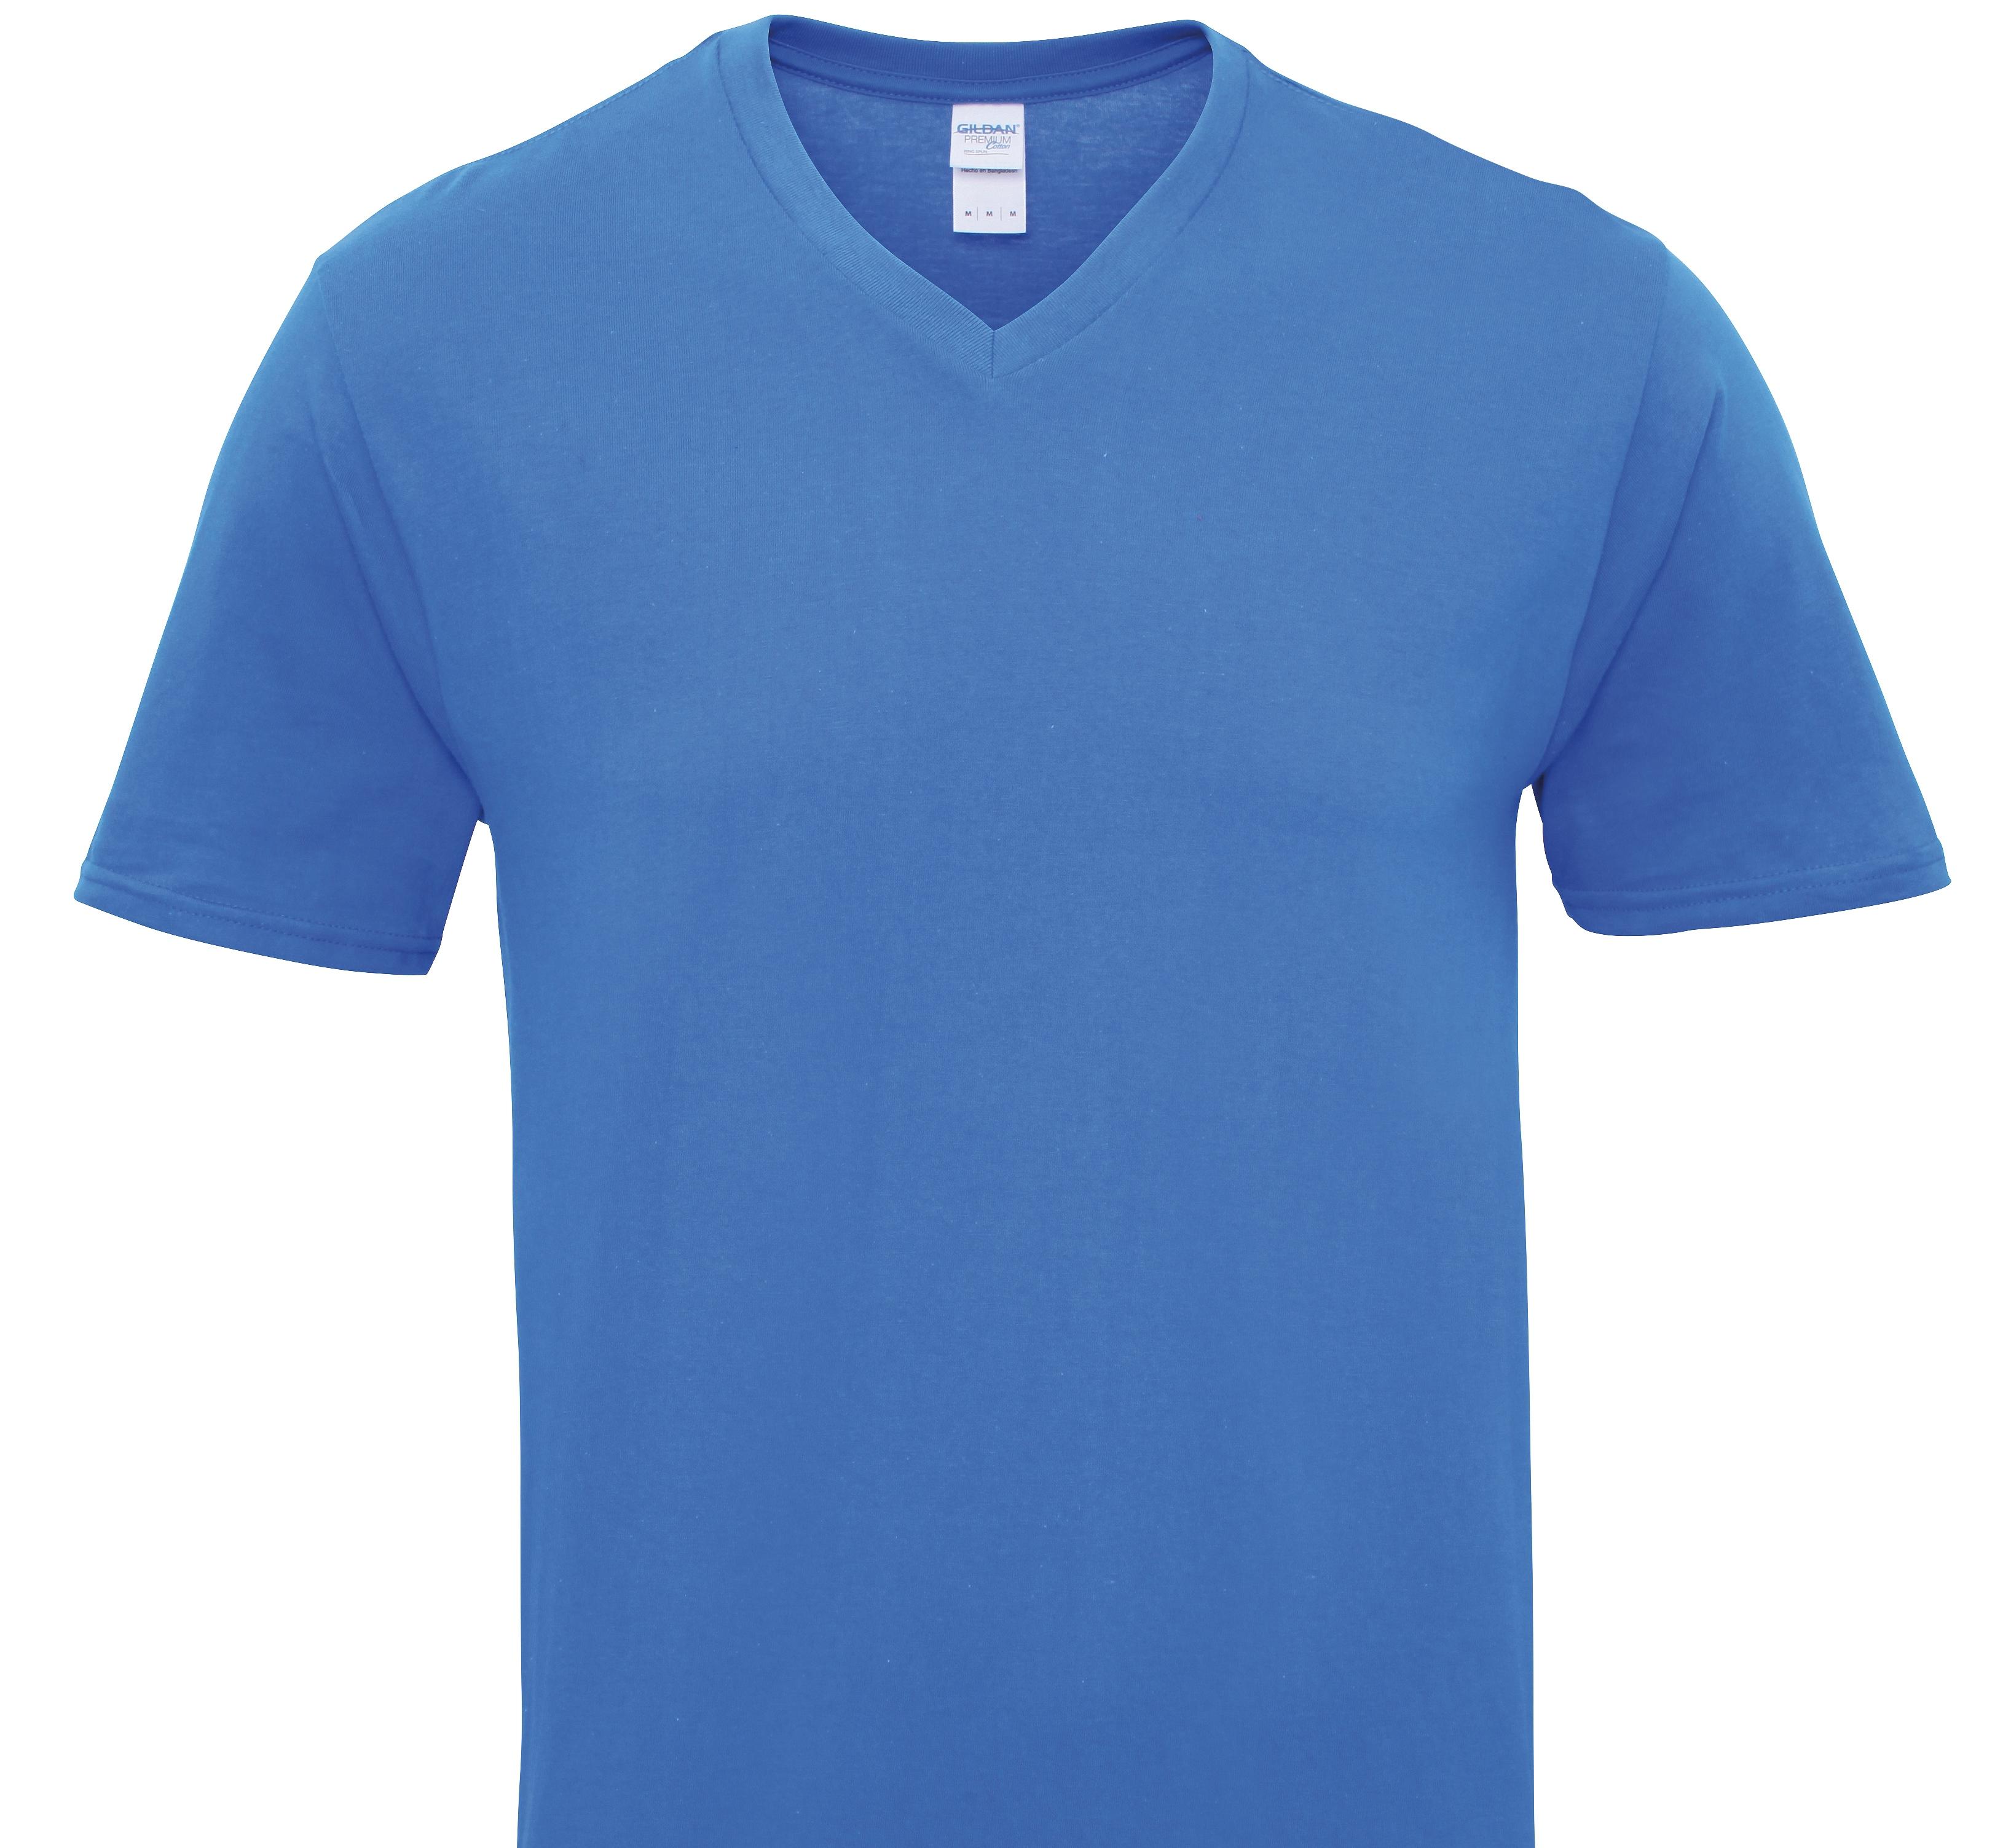 Welsh Springer Spaniel T-Shirts Women's V Neck Premium Cotton